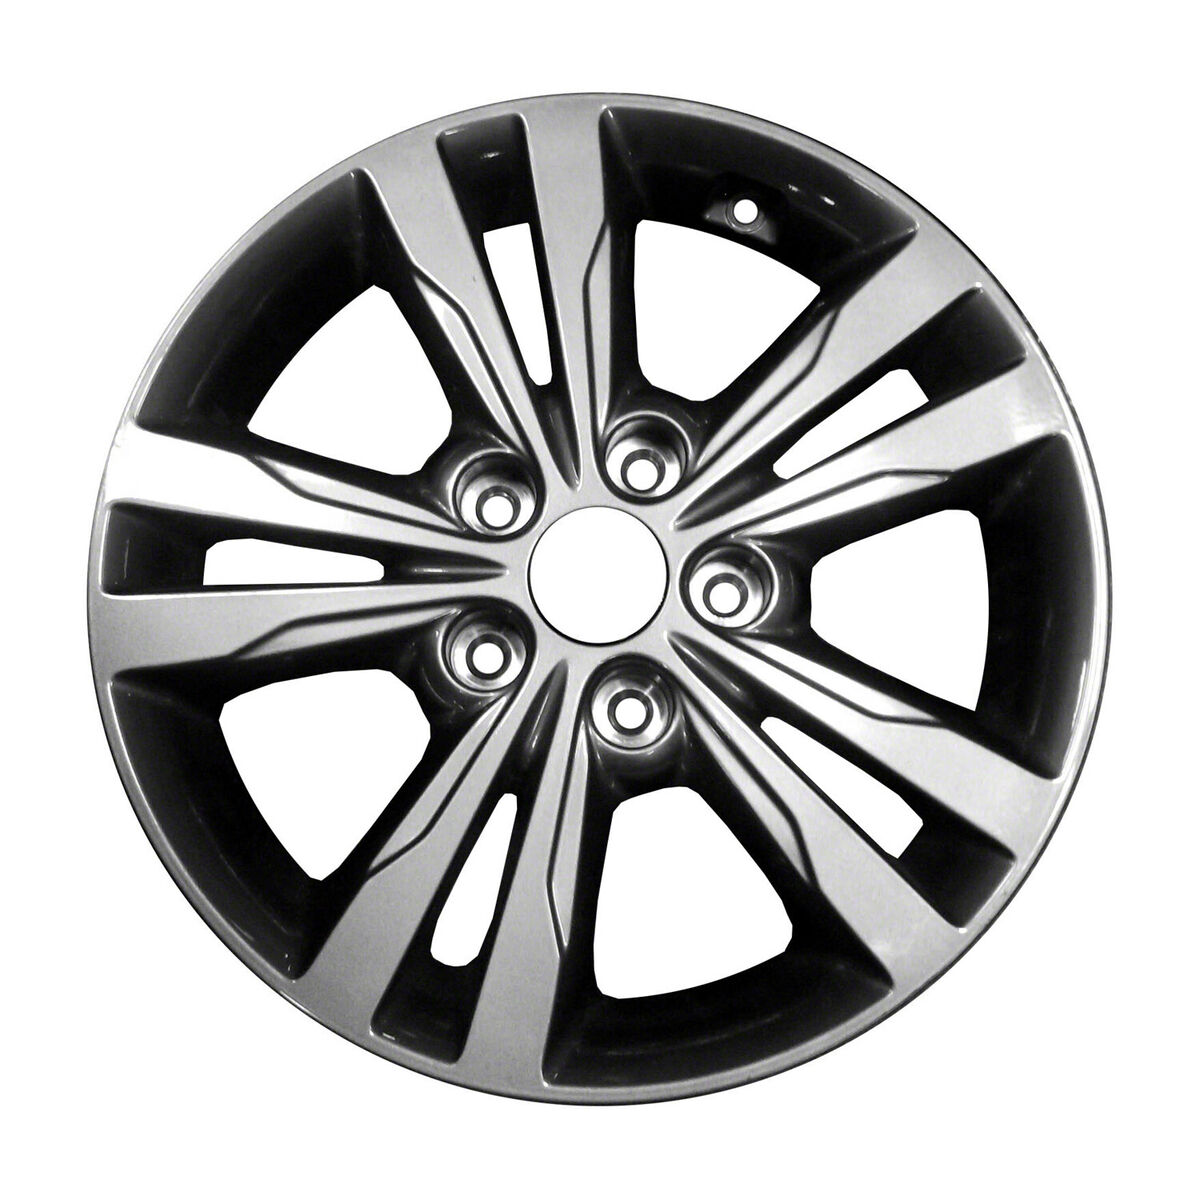 Aluminum Wheel Rim for 2018 Hyundai Elantra 16 X 6.5 5x114.3 mm | eBay